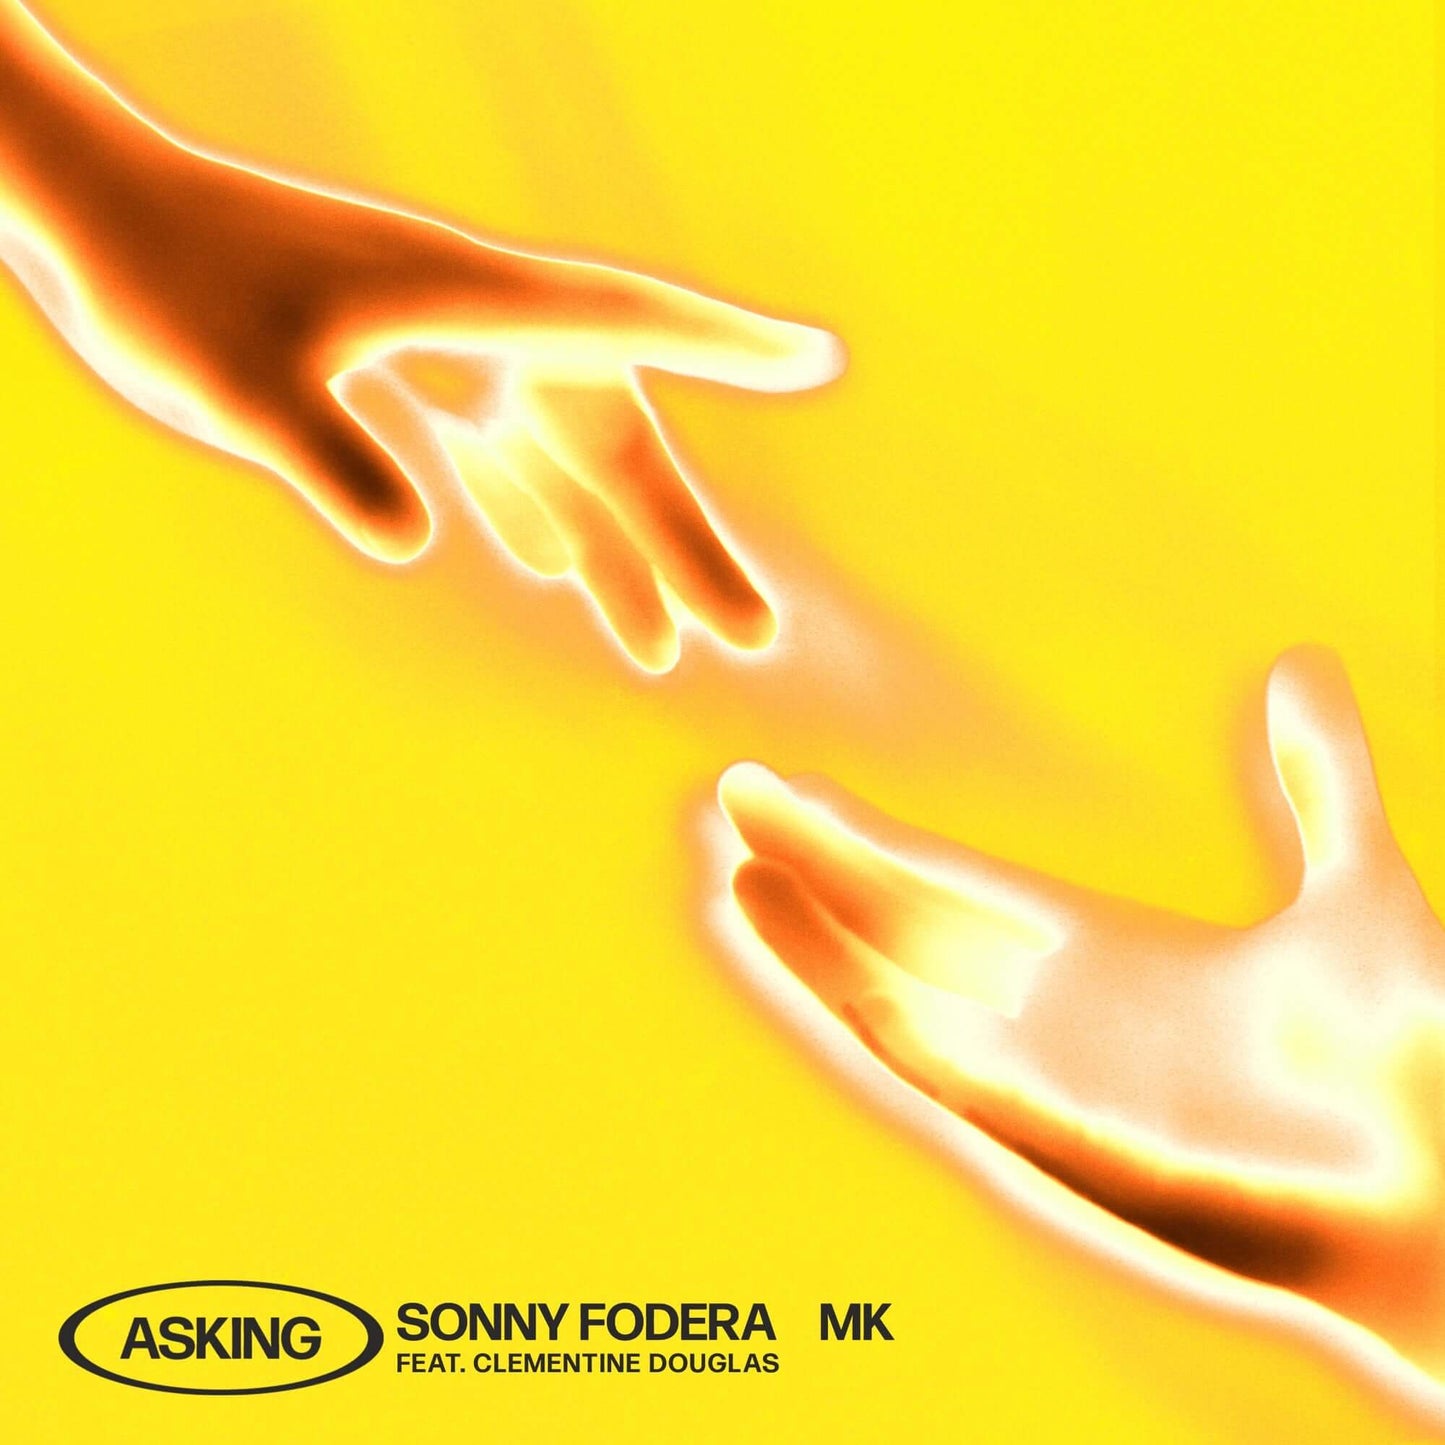 Sonny Fodera & MK - Asking ft. Clementine Douglas (Studio Acapella)